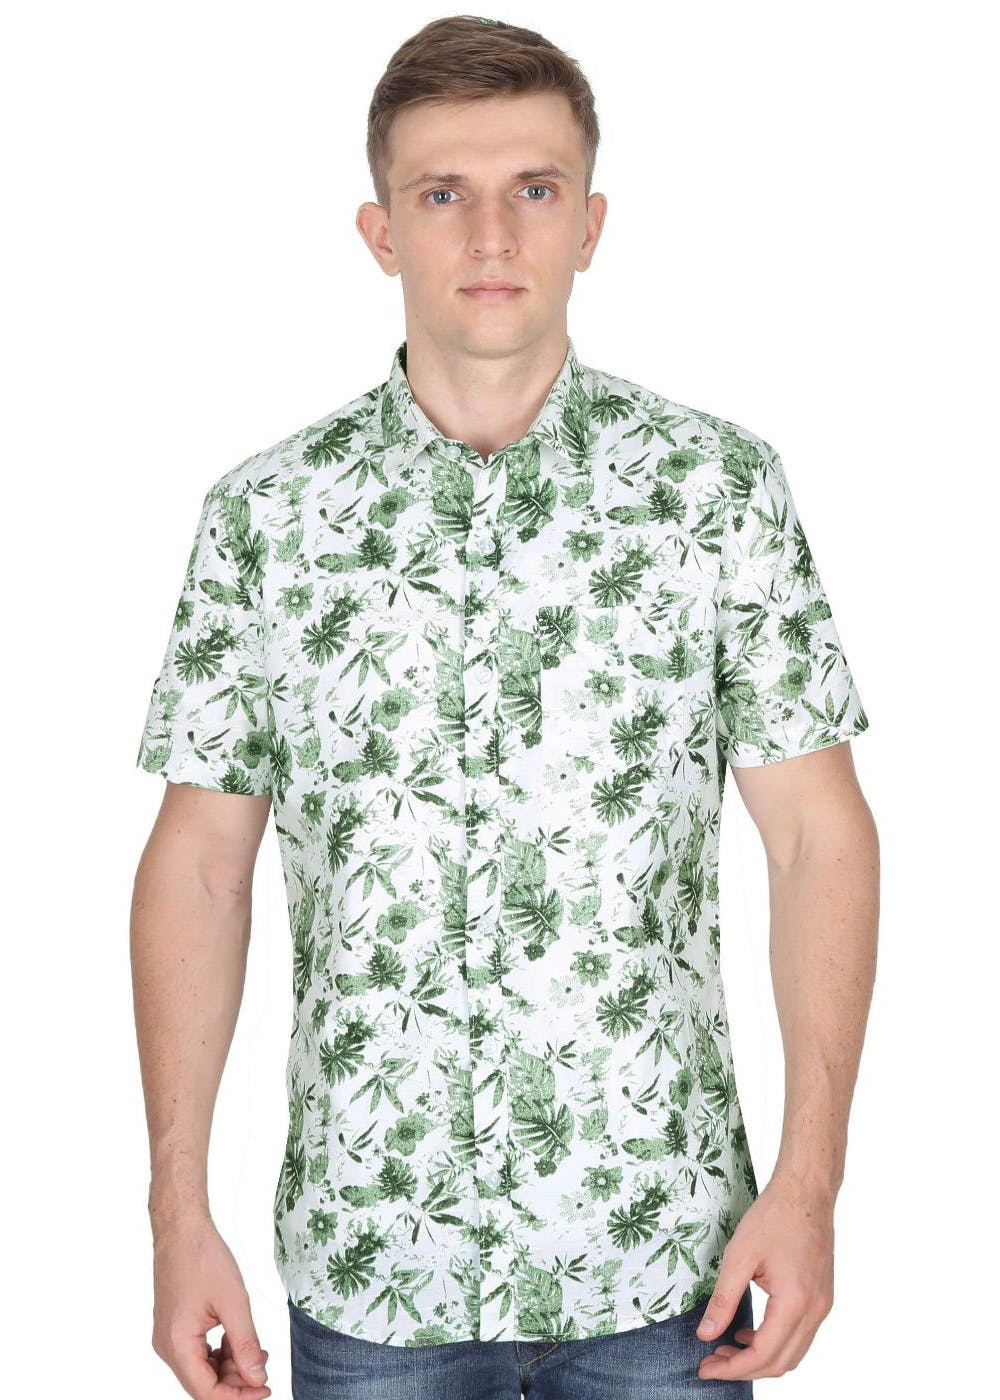 Get Pista Green Leaf Printed Half Sleeves Shirt at ₹ 799 | LBB Shop